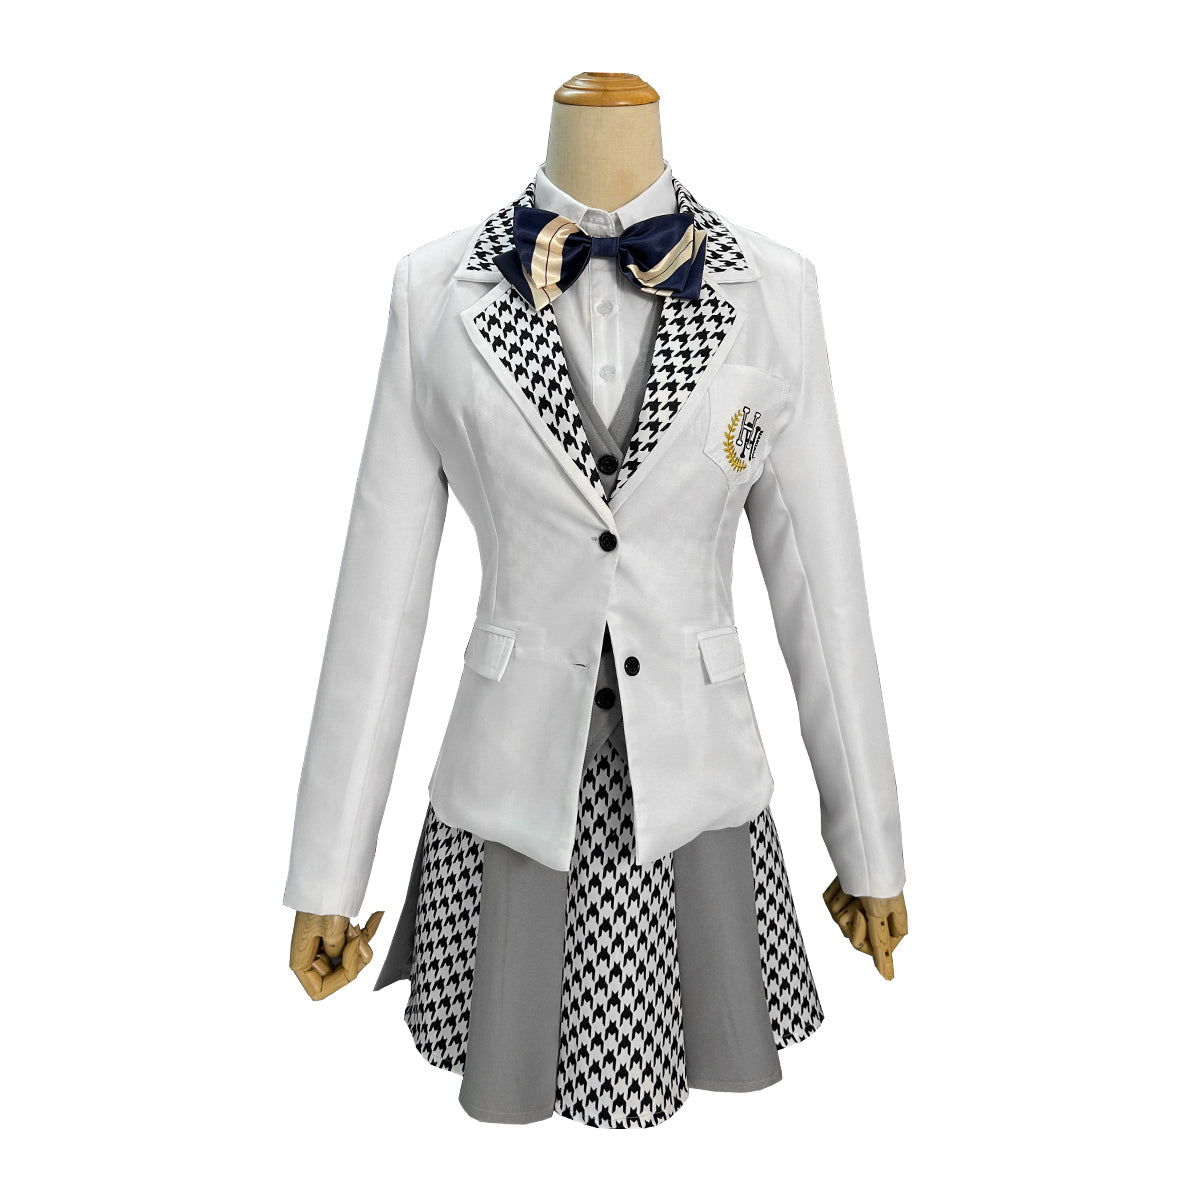 HOLOUN Blue Lock Anime Reo Mikage Cosplay Costume School Uniform Embroidery Suit Skirt Shirt Vest Tie Gift